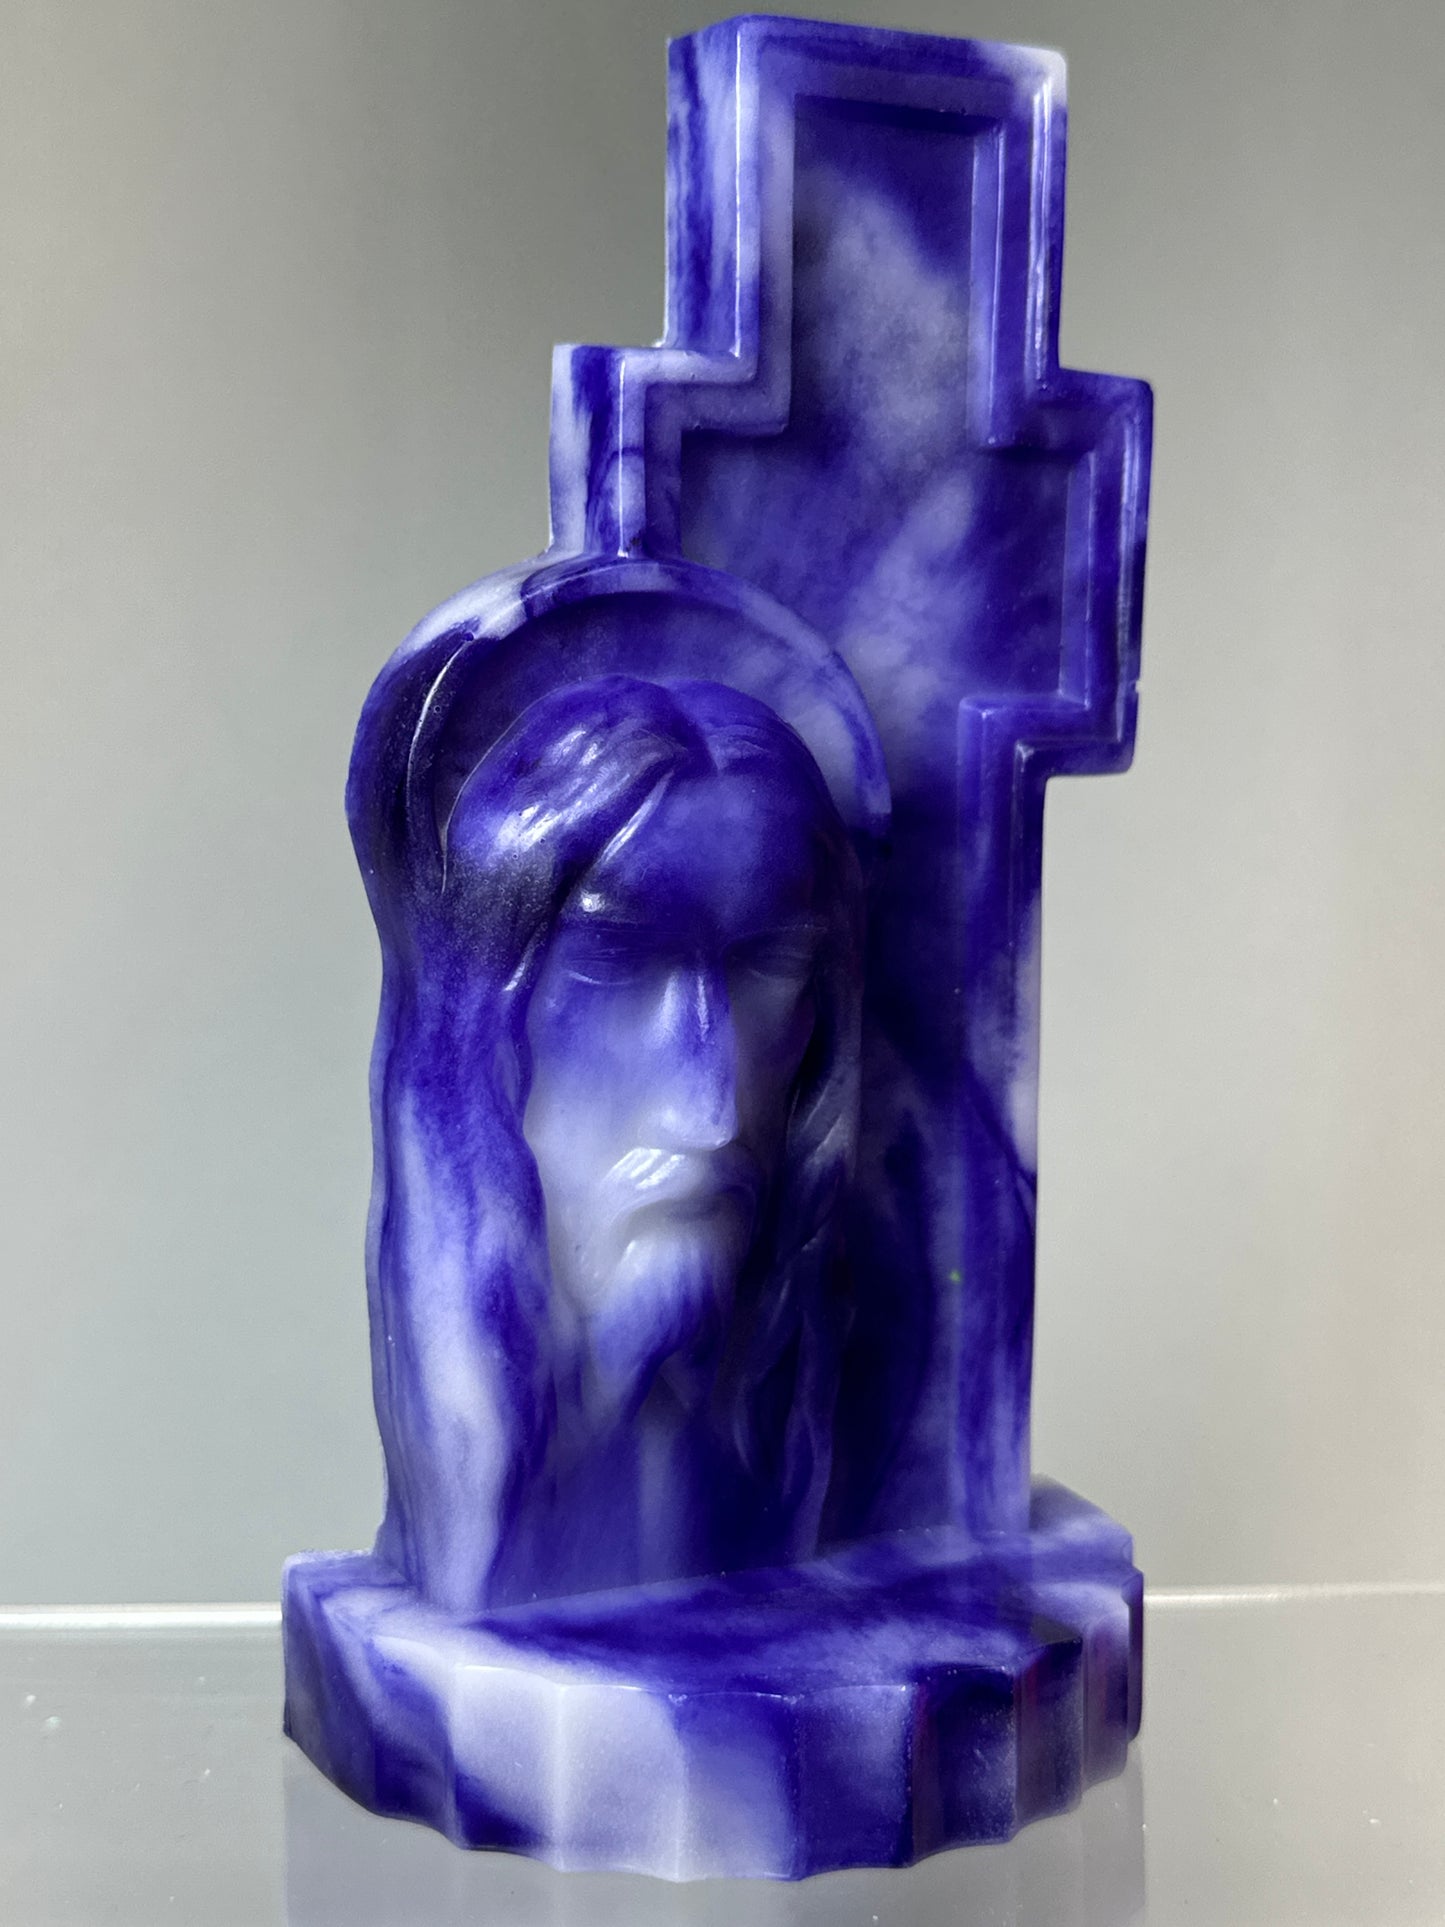 Sad Jesus: Marbled Purple Glow in the Dark